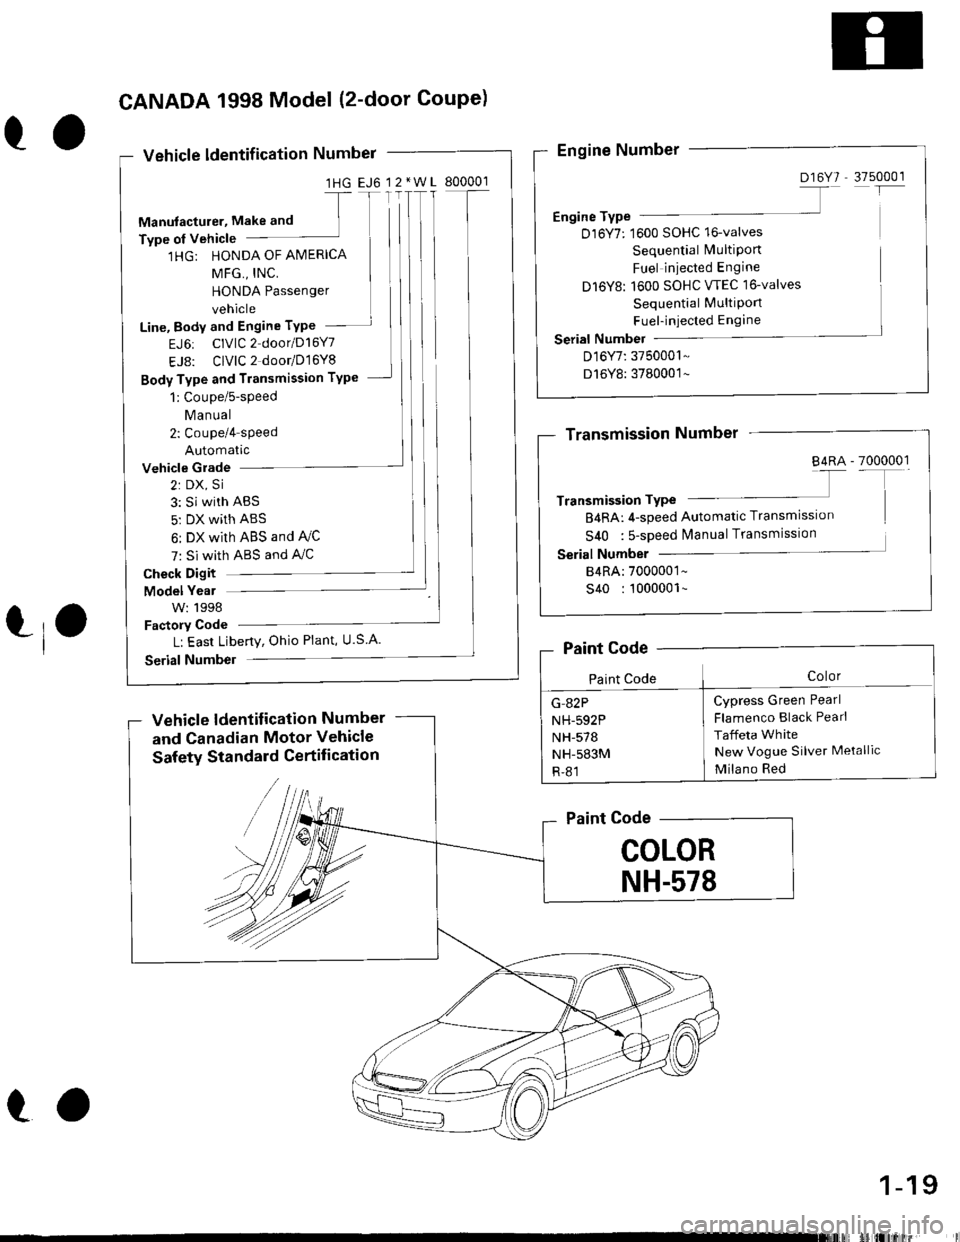 HONDA CIVIC 1999 6.G User Guide Vehicle ldentif ication Numbel
1HG EJ6 12*W
1HG: HONDA OF AMERICA
MFG,, INC,
HONDA Passenger
vehicle
Line, Body and Engine TYPe
EJ6: CIVIC 2 door/D16Y7
EJ8: CIVIC 2 dootD16Y8
Body Type and Transmissio